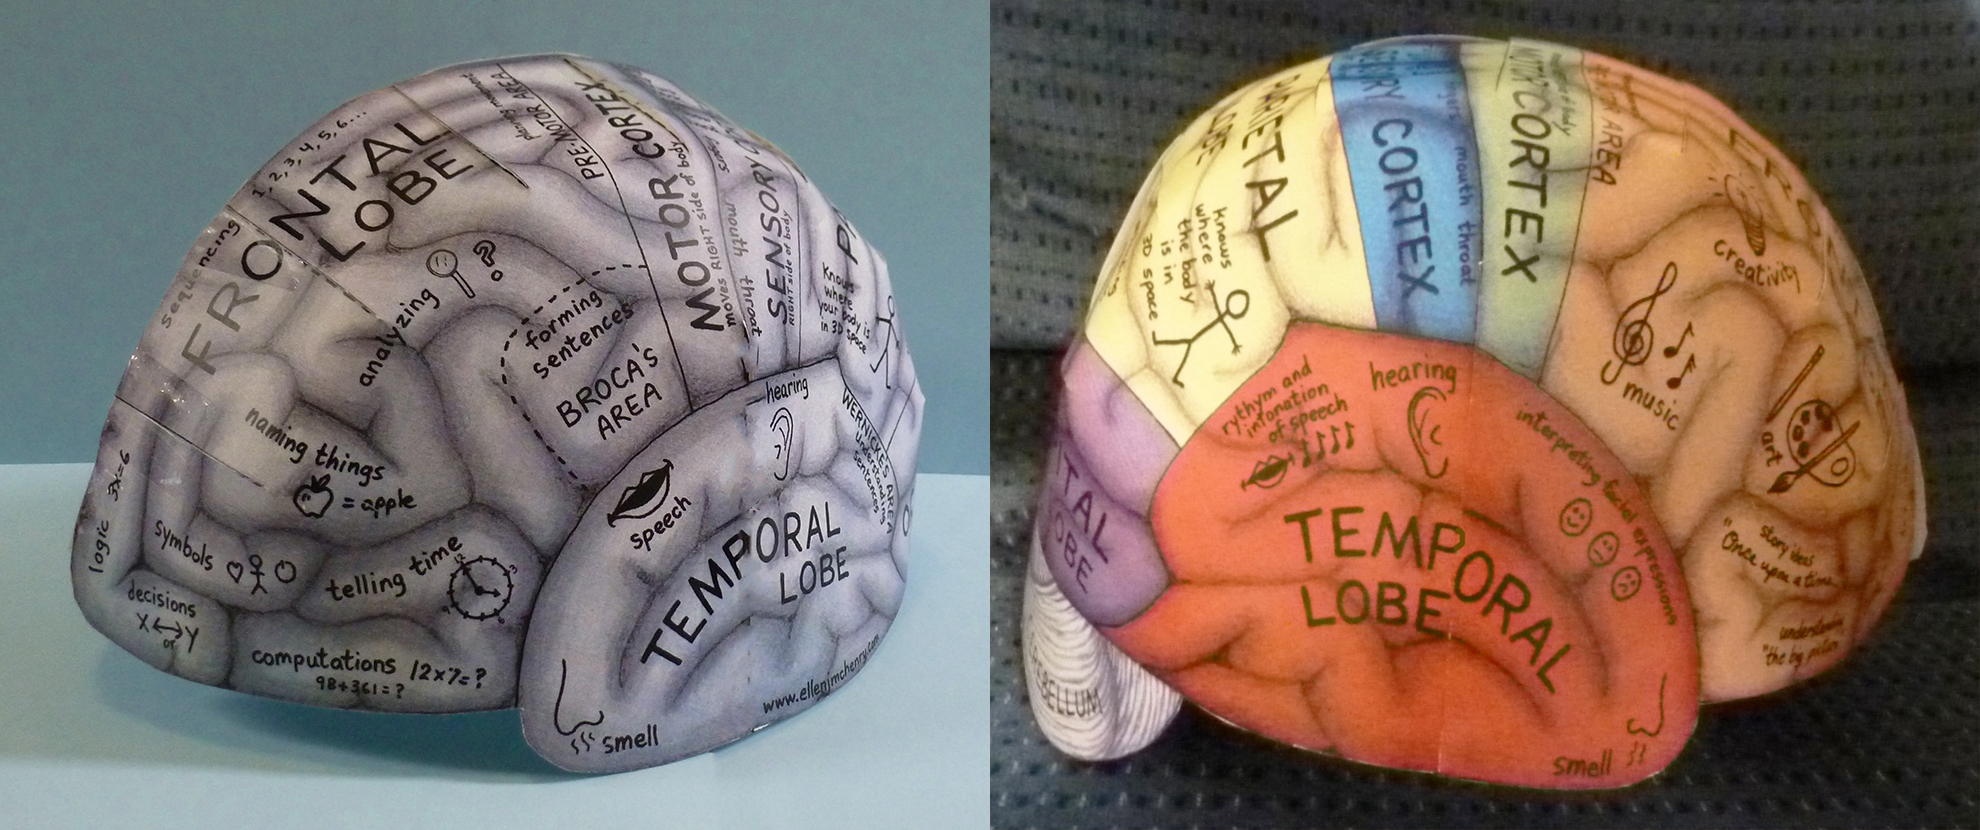 Brain Hemisphere Hat – Ellen McHenry's Basement Workshop